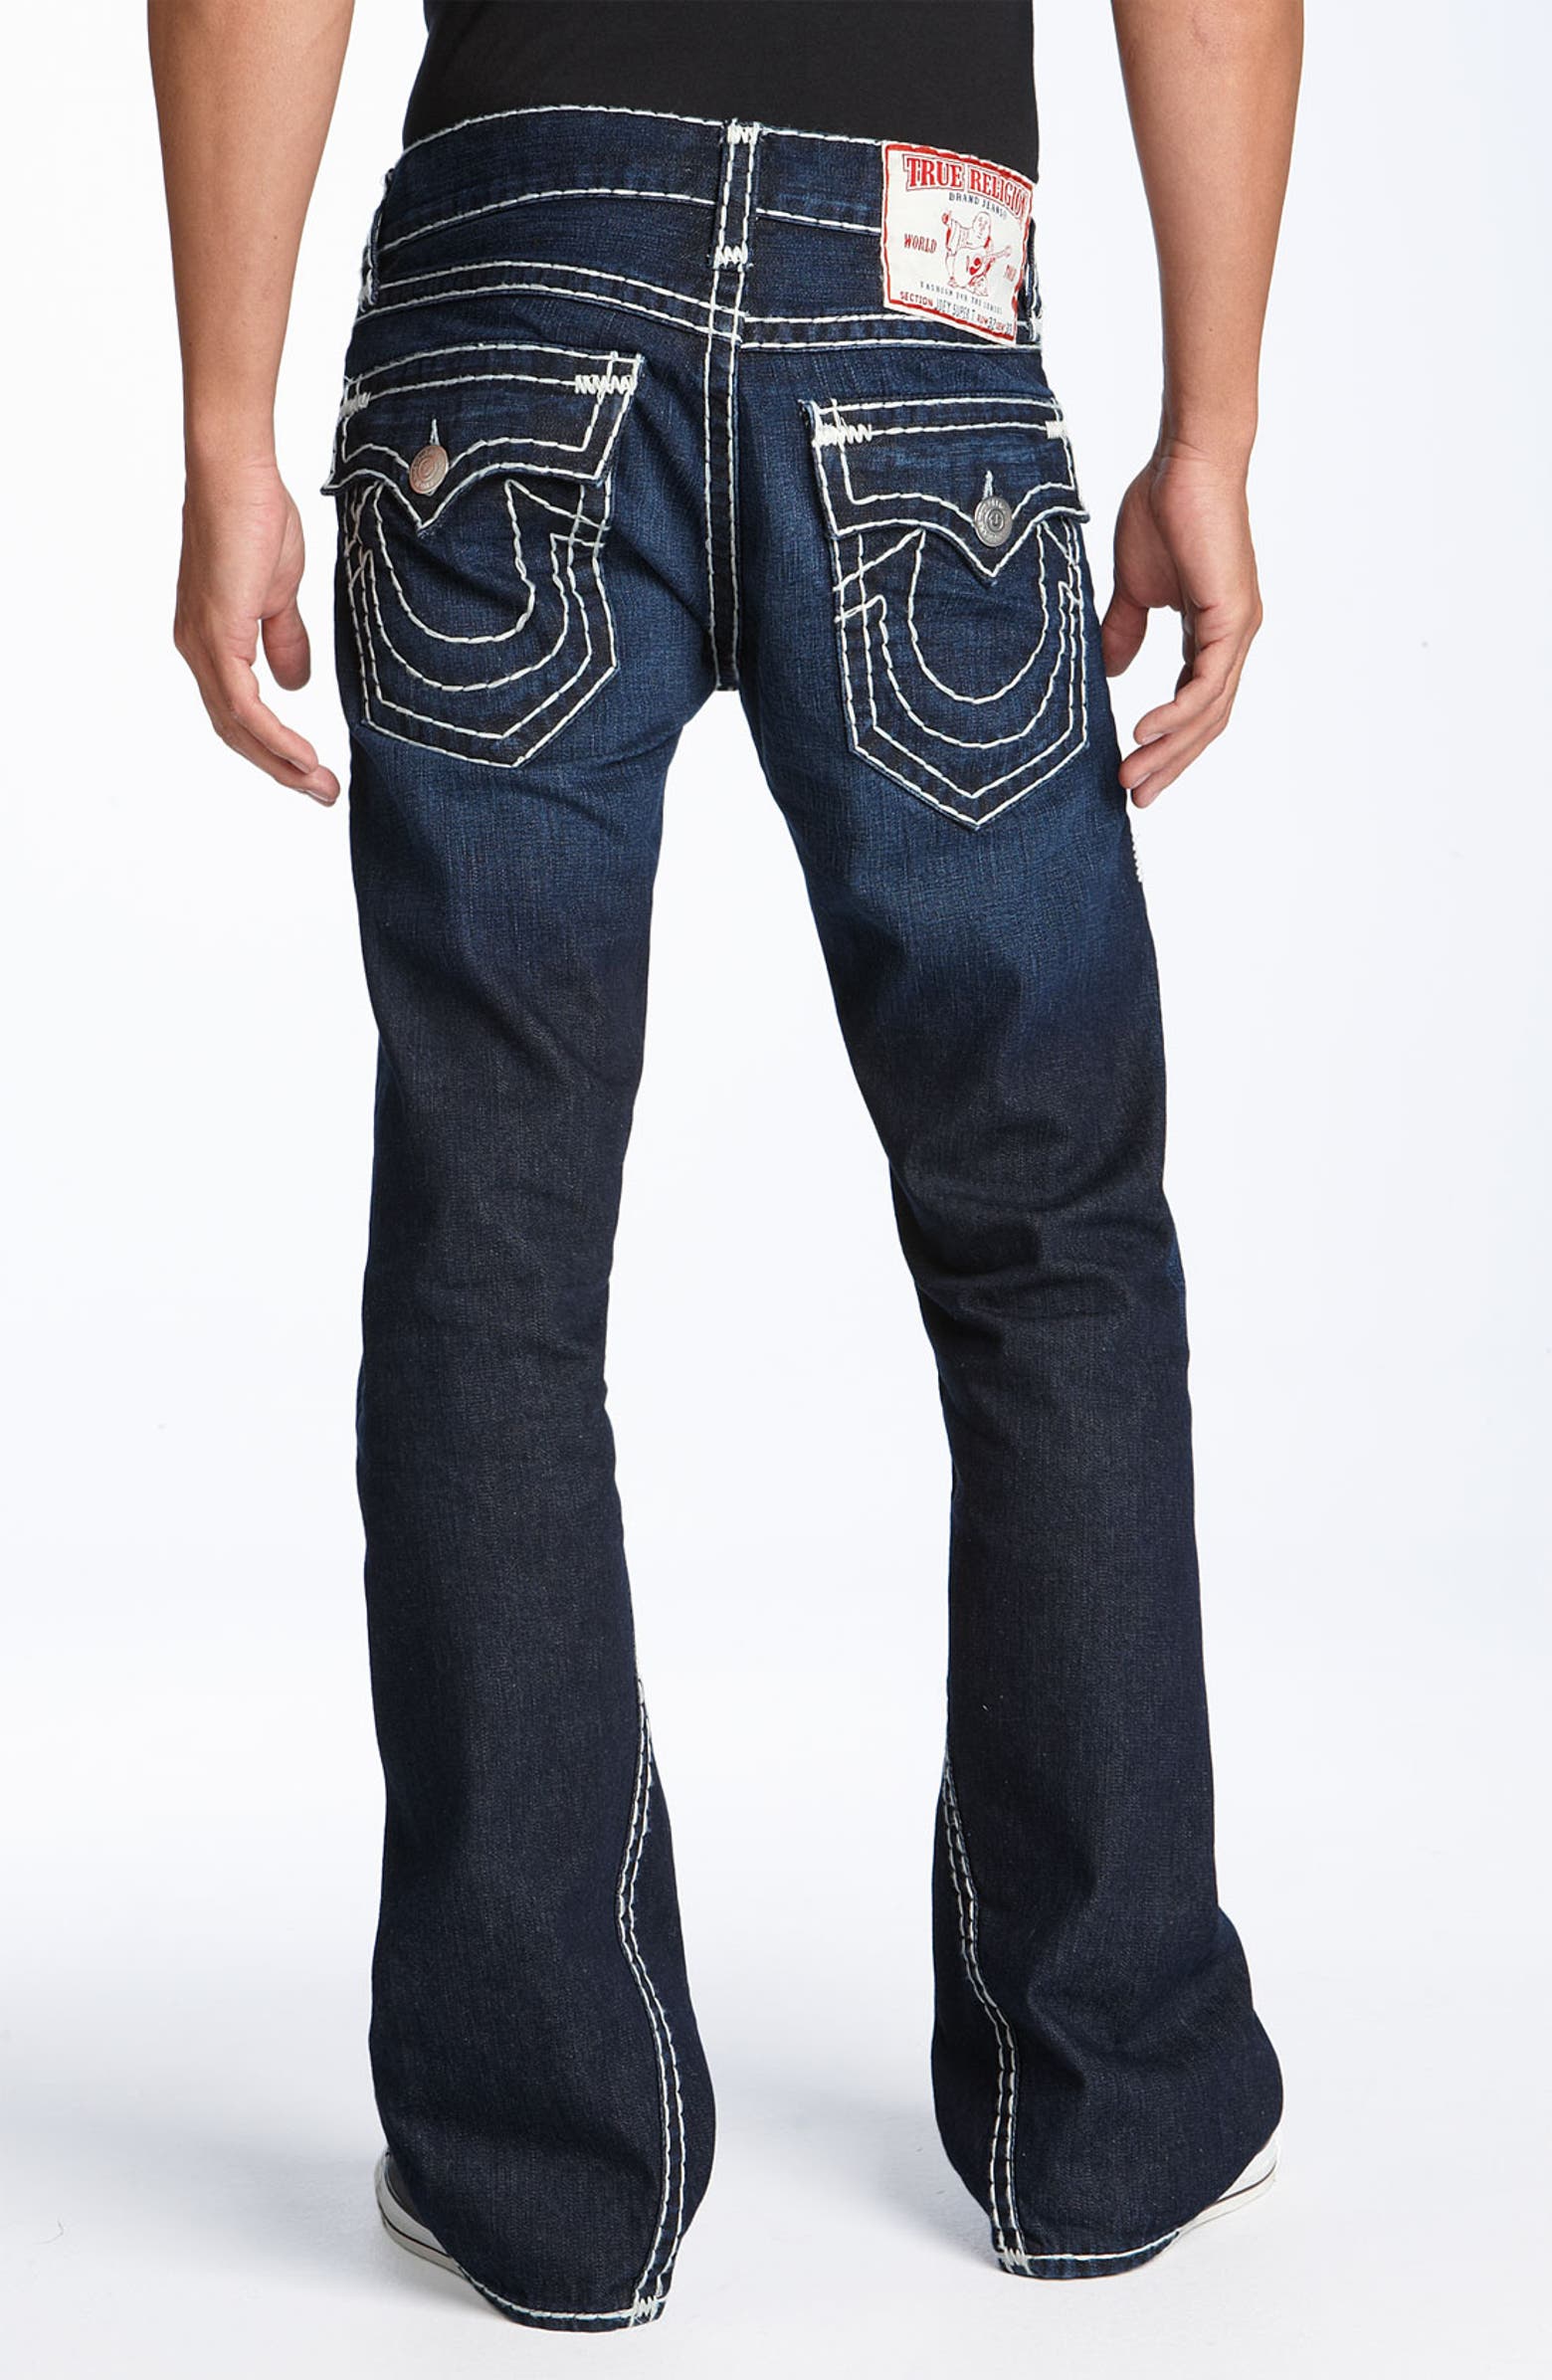 True Religion Brand Jeans 'Joey' Super T Bootcut Jeans (Dark Urban